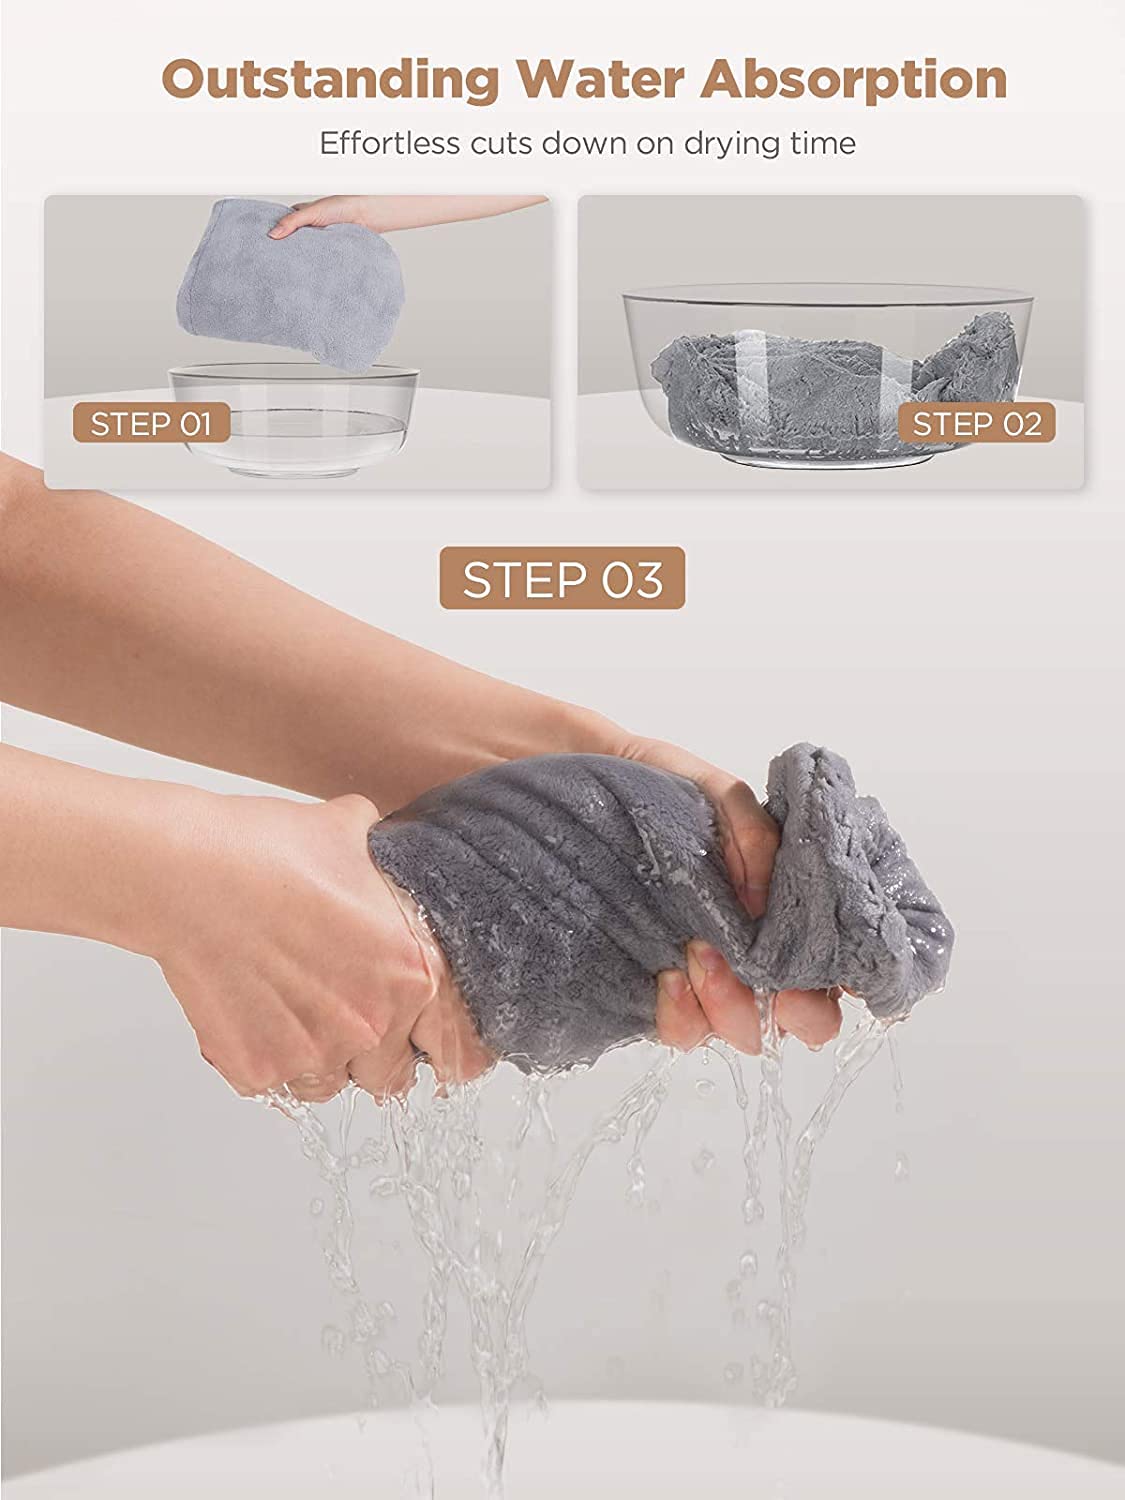 Hicober Microfiber Hair Towel, 3 Packs Hair Turbans for Wet Hair, Drying Hair Wrap Towels for Curly Hair Women Anti Frizz (Blue,Grey,Pink)